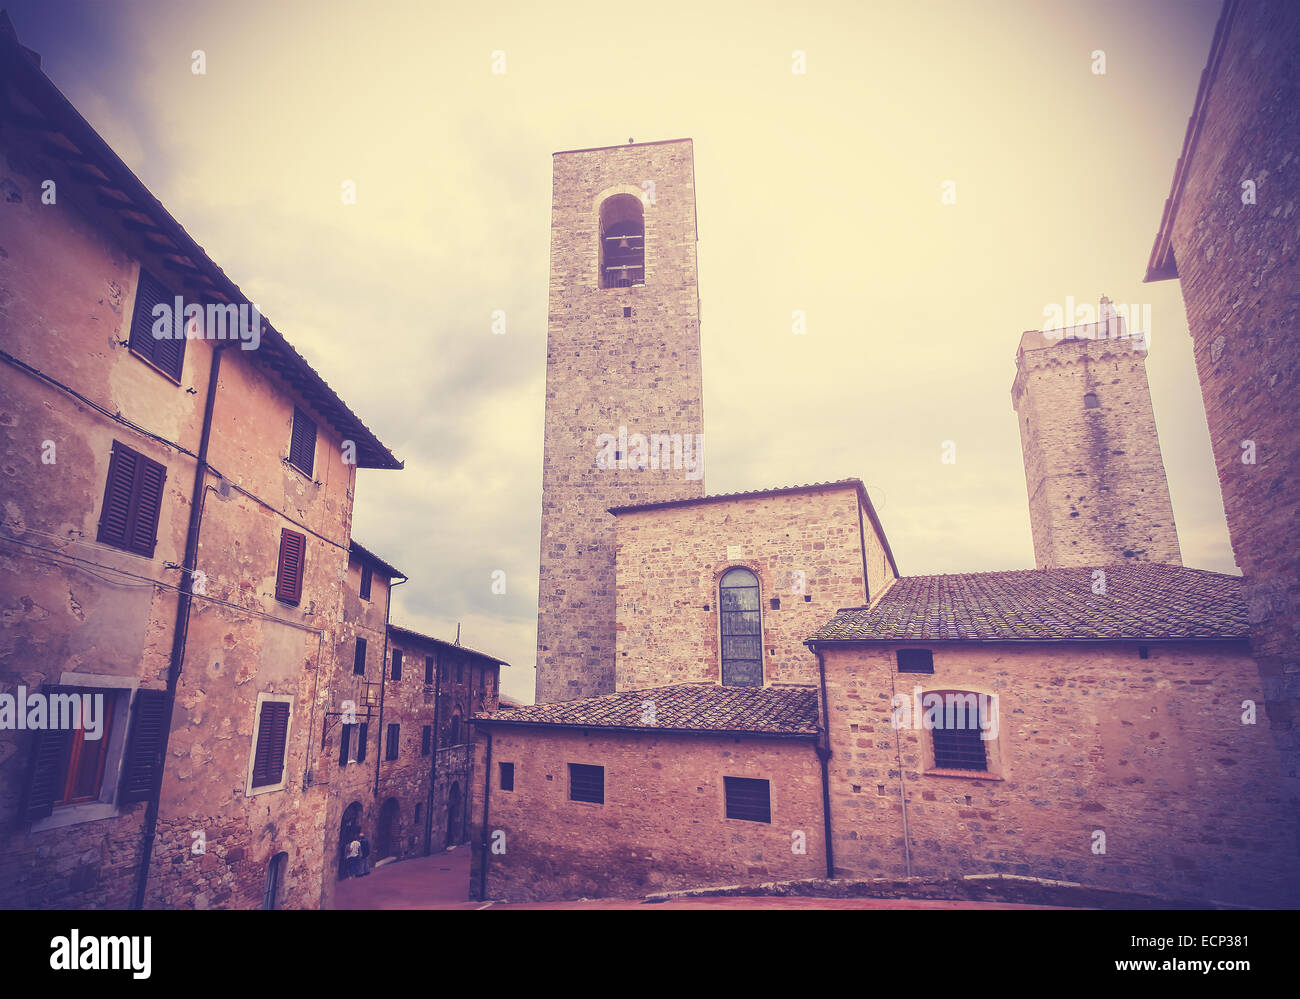 Retro vintage stylized picture of San Gimignano, Italy. Stock Photo